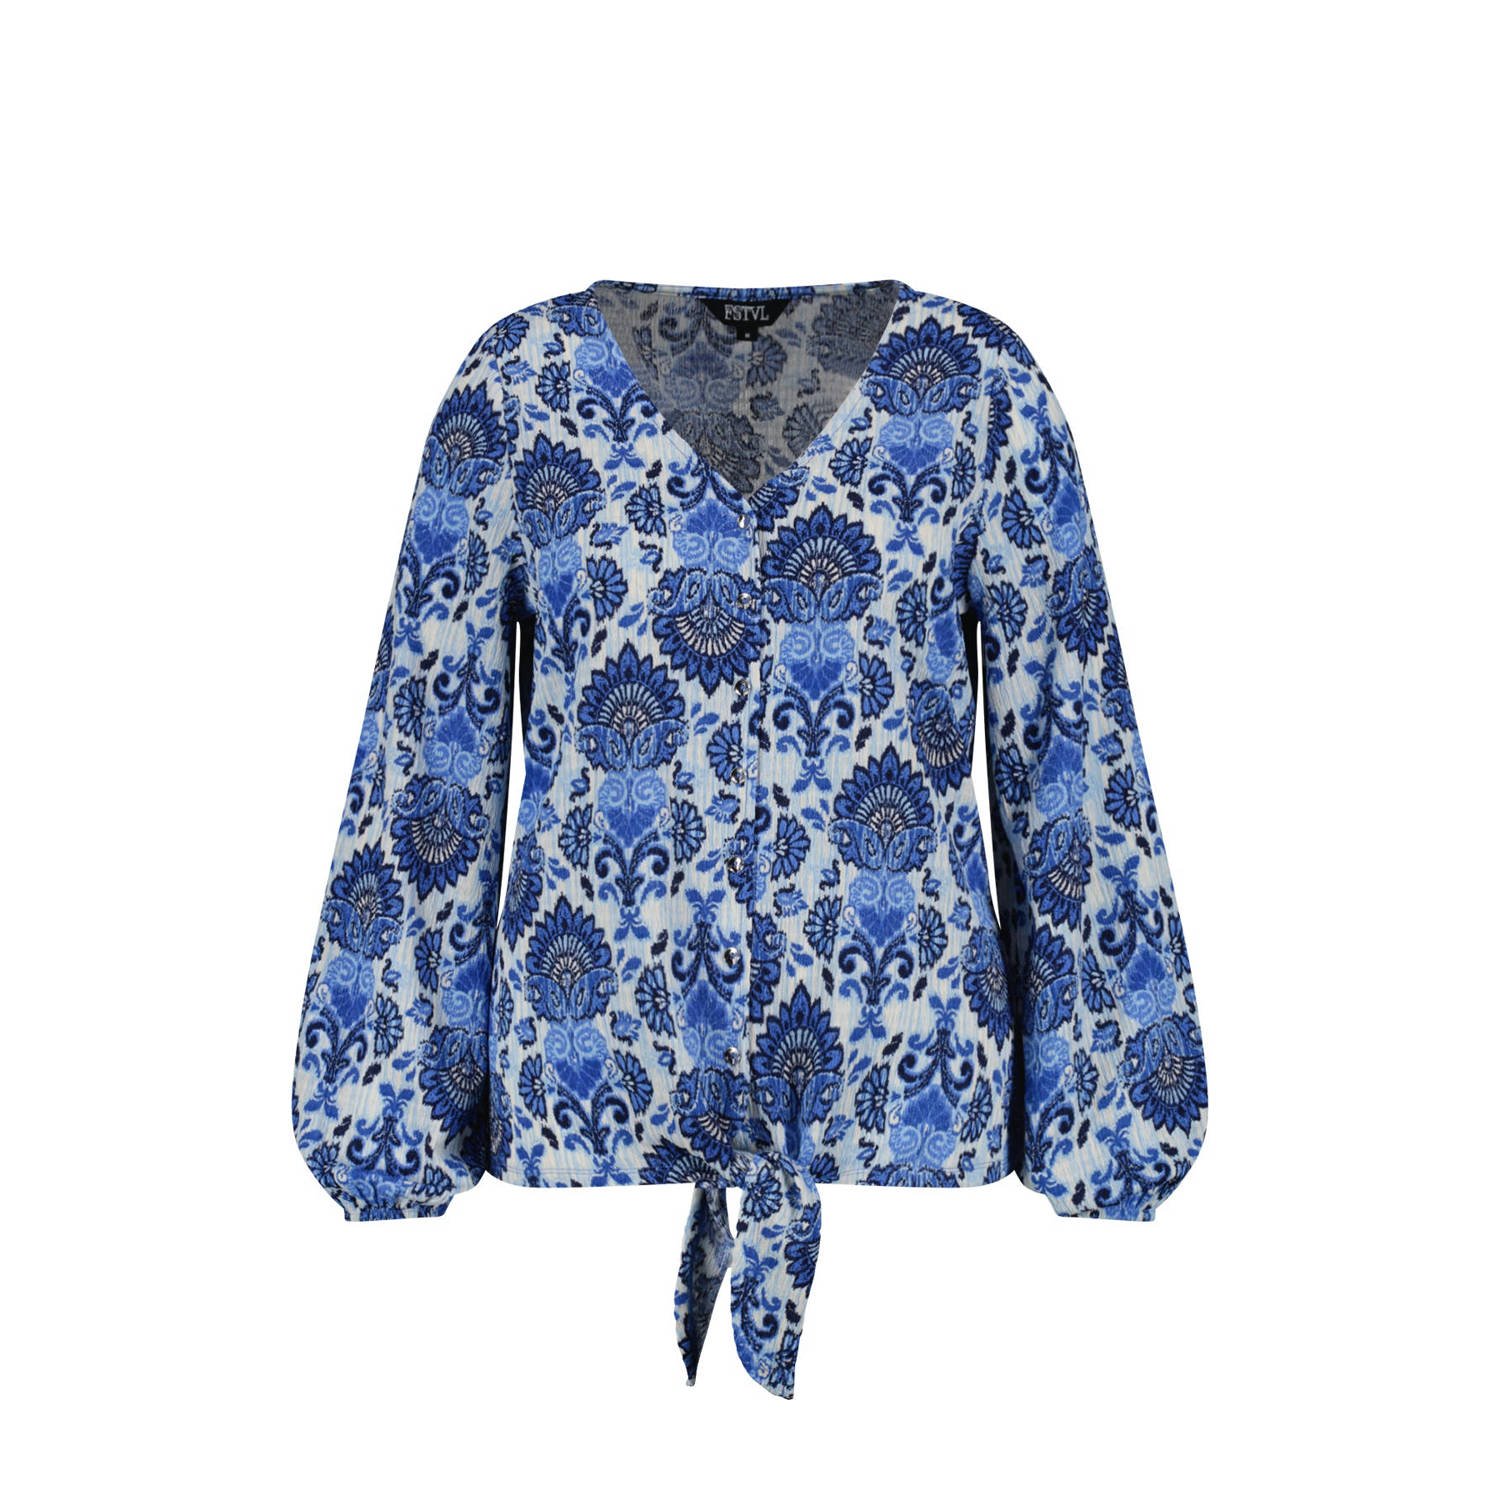 MS Mode blousetop met paisleyprint blauw lichtblauw wit